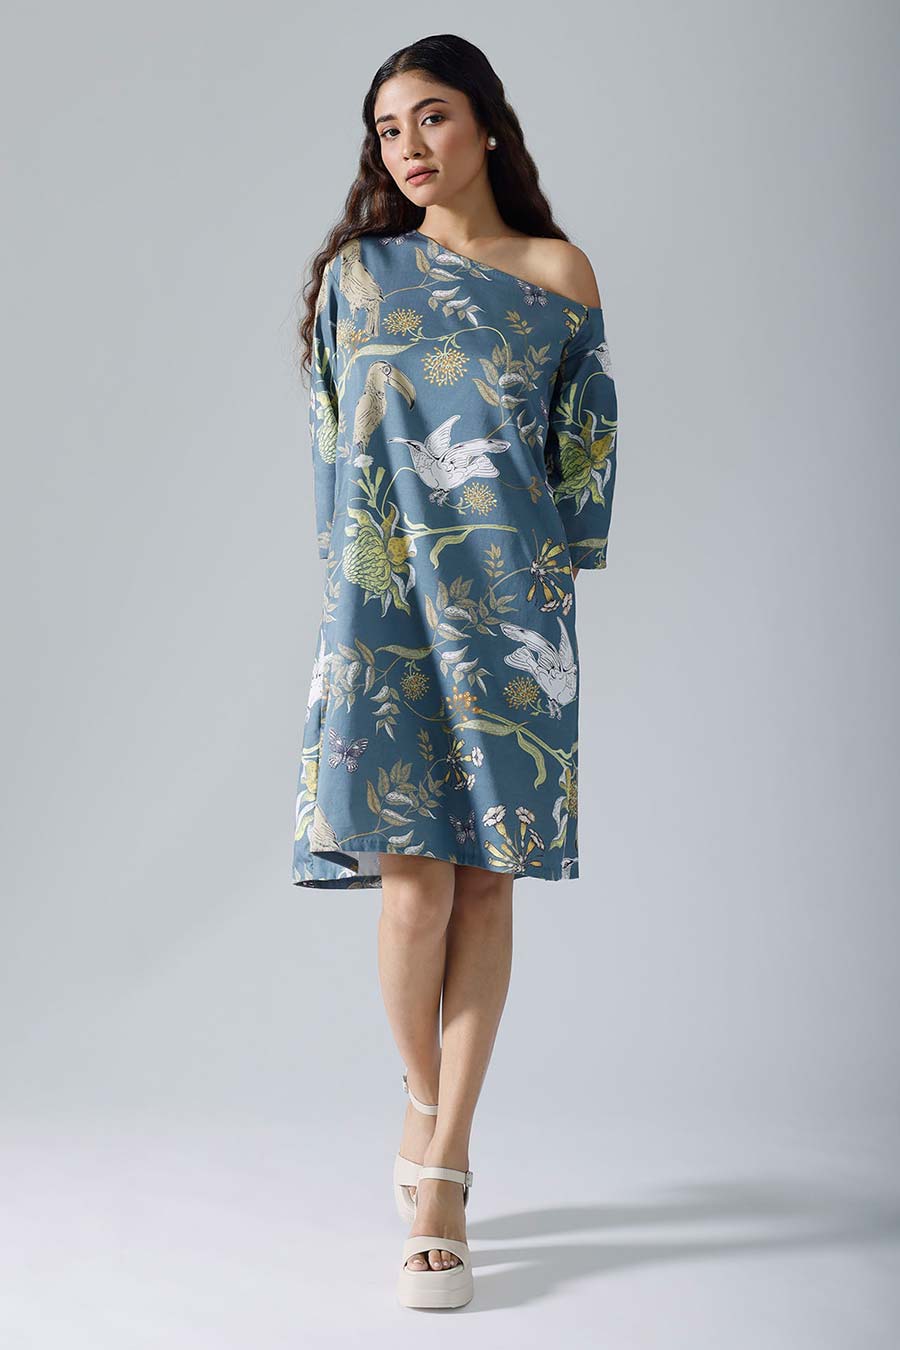 Teal Printed Toucan Dress